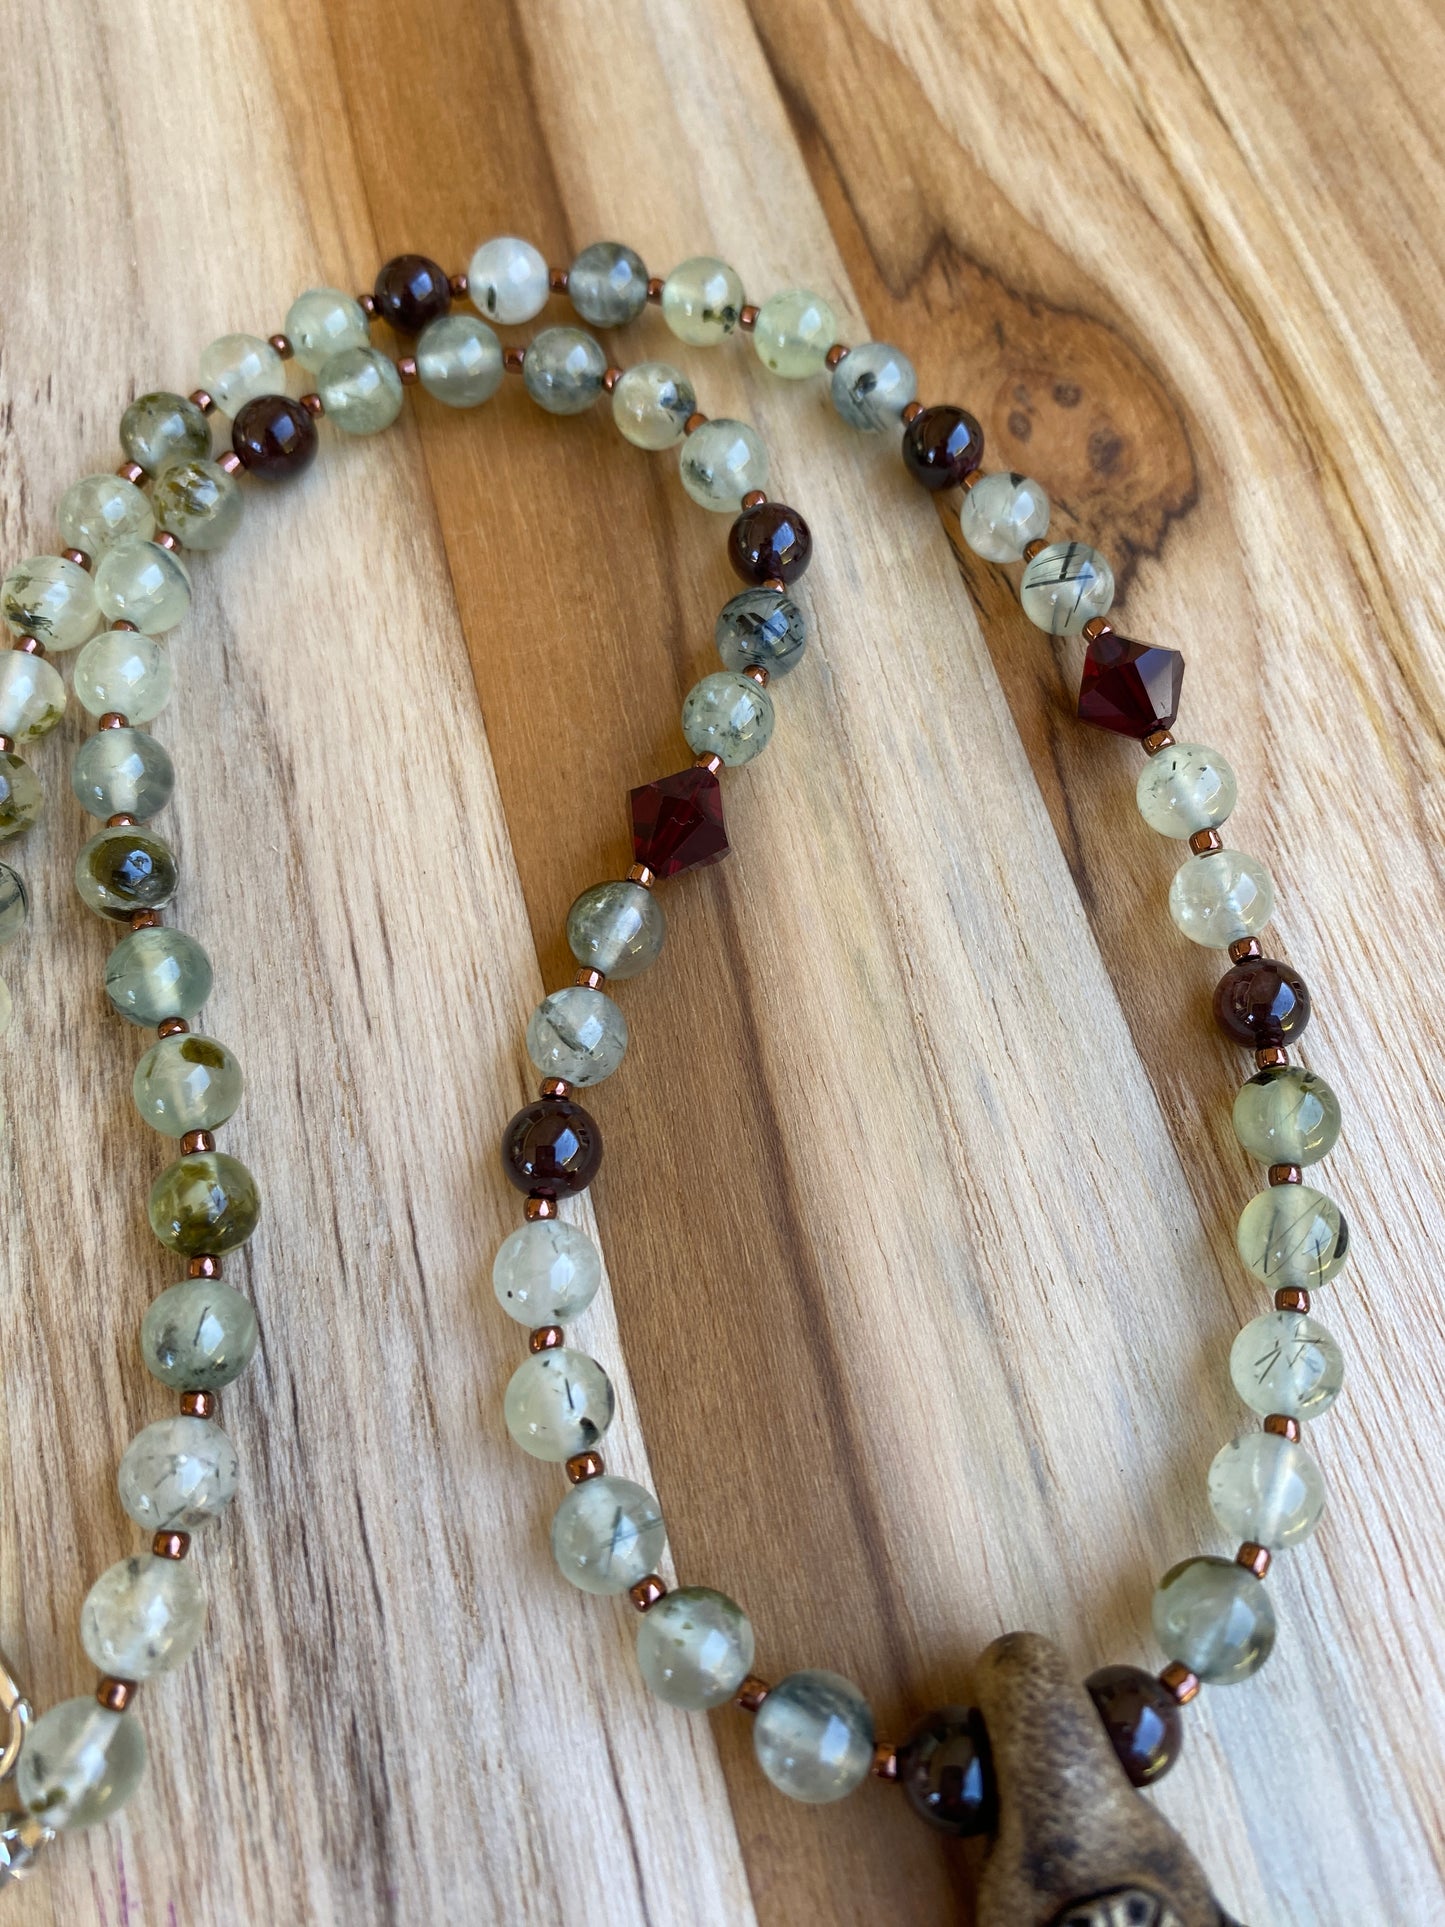 Prehnite Pendant Necklace with Prehnite and Garnet Beads